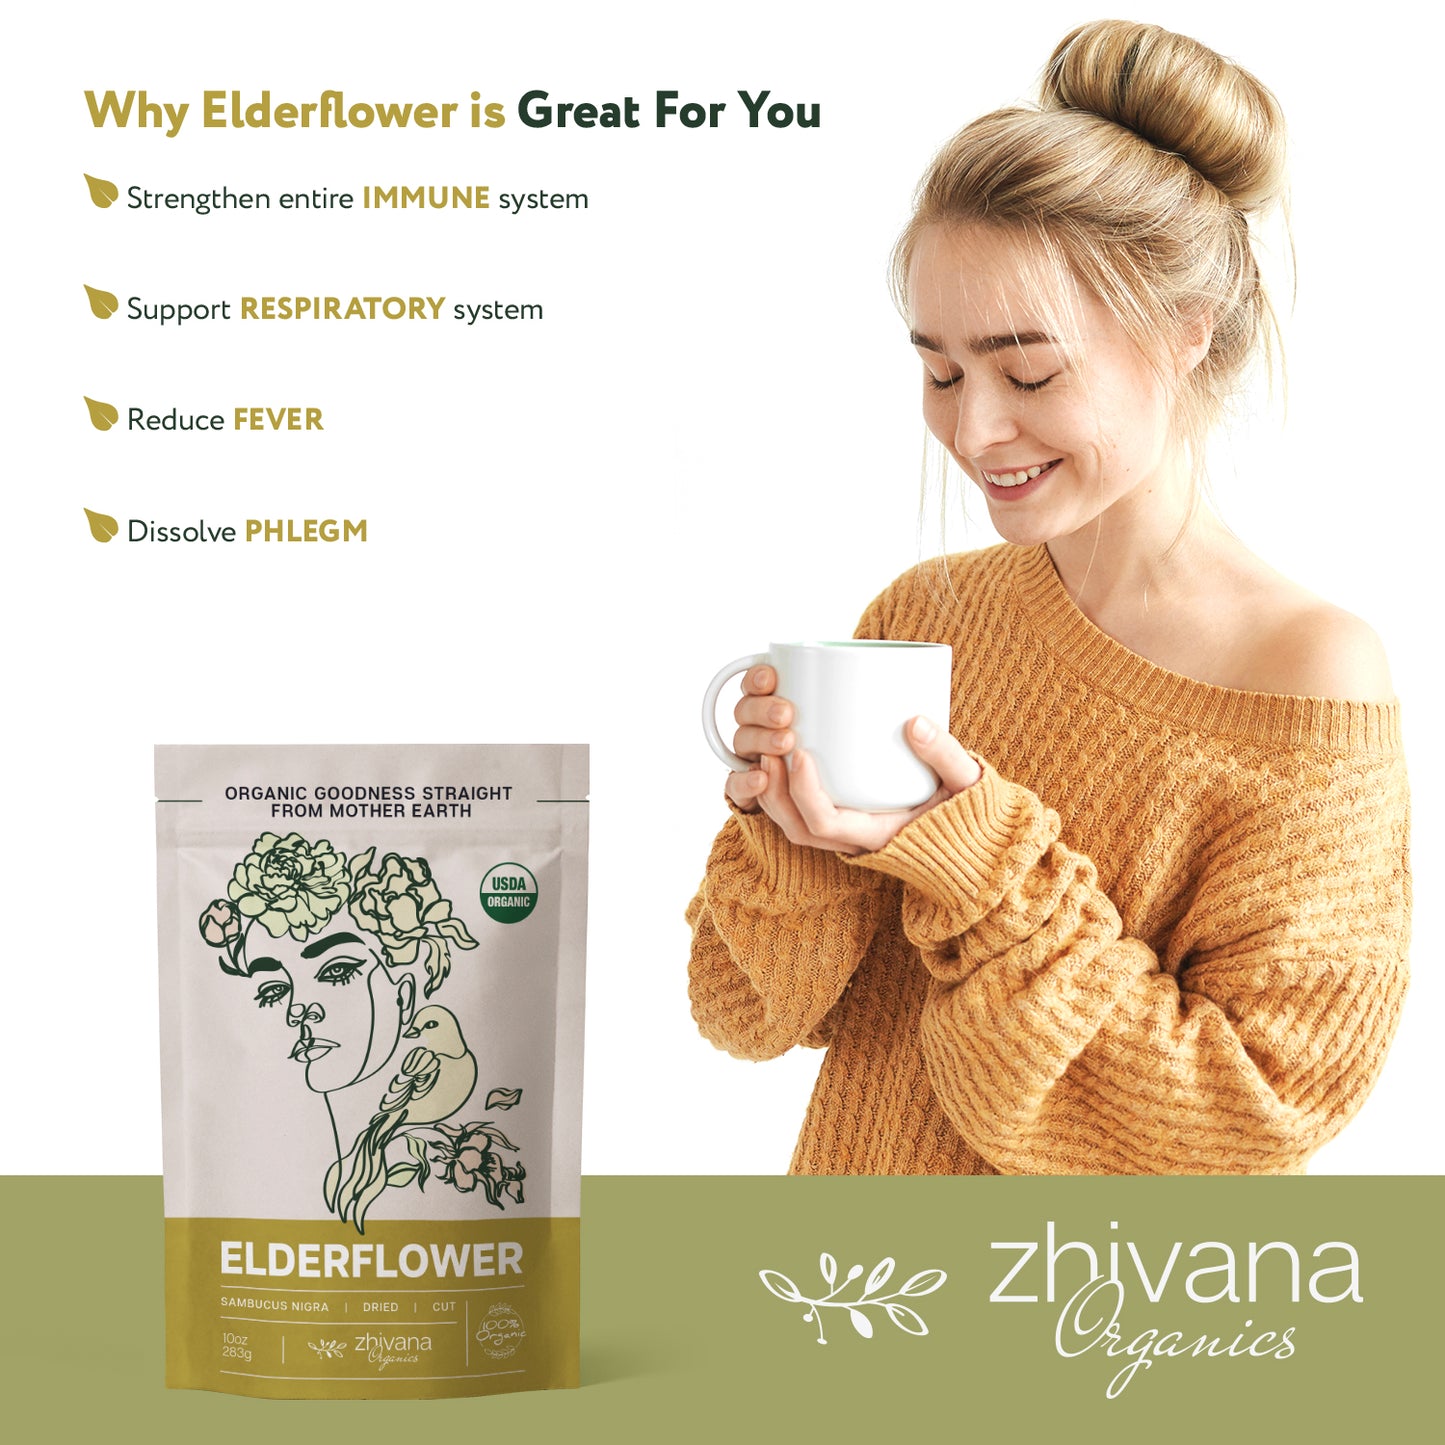 Elderflower Dried Cut & Sifted - Zhivana Organics